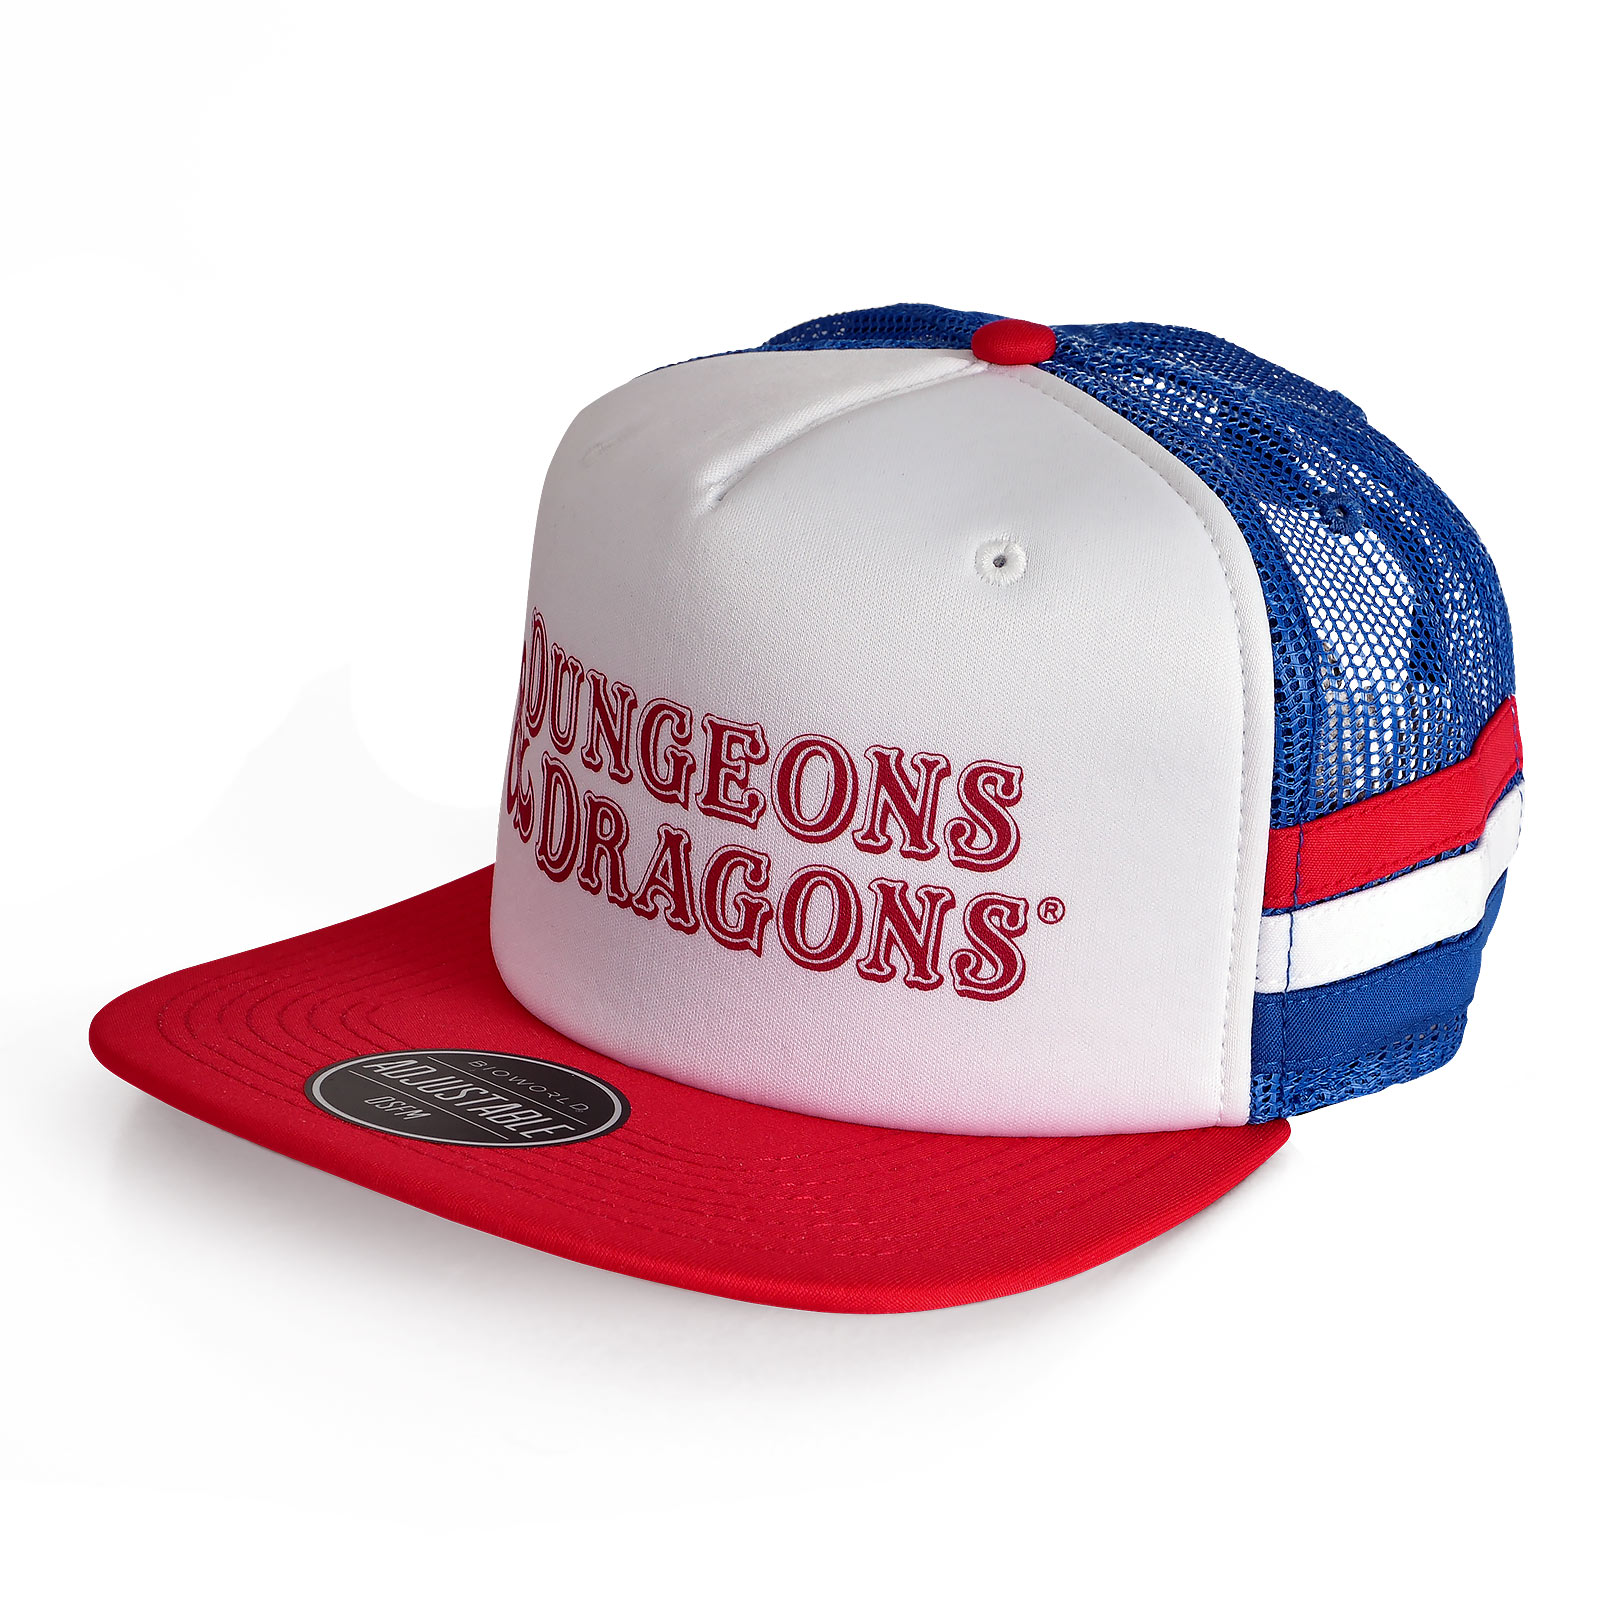 Dungeons & Dragons - Logo Snapback Cap